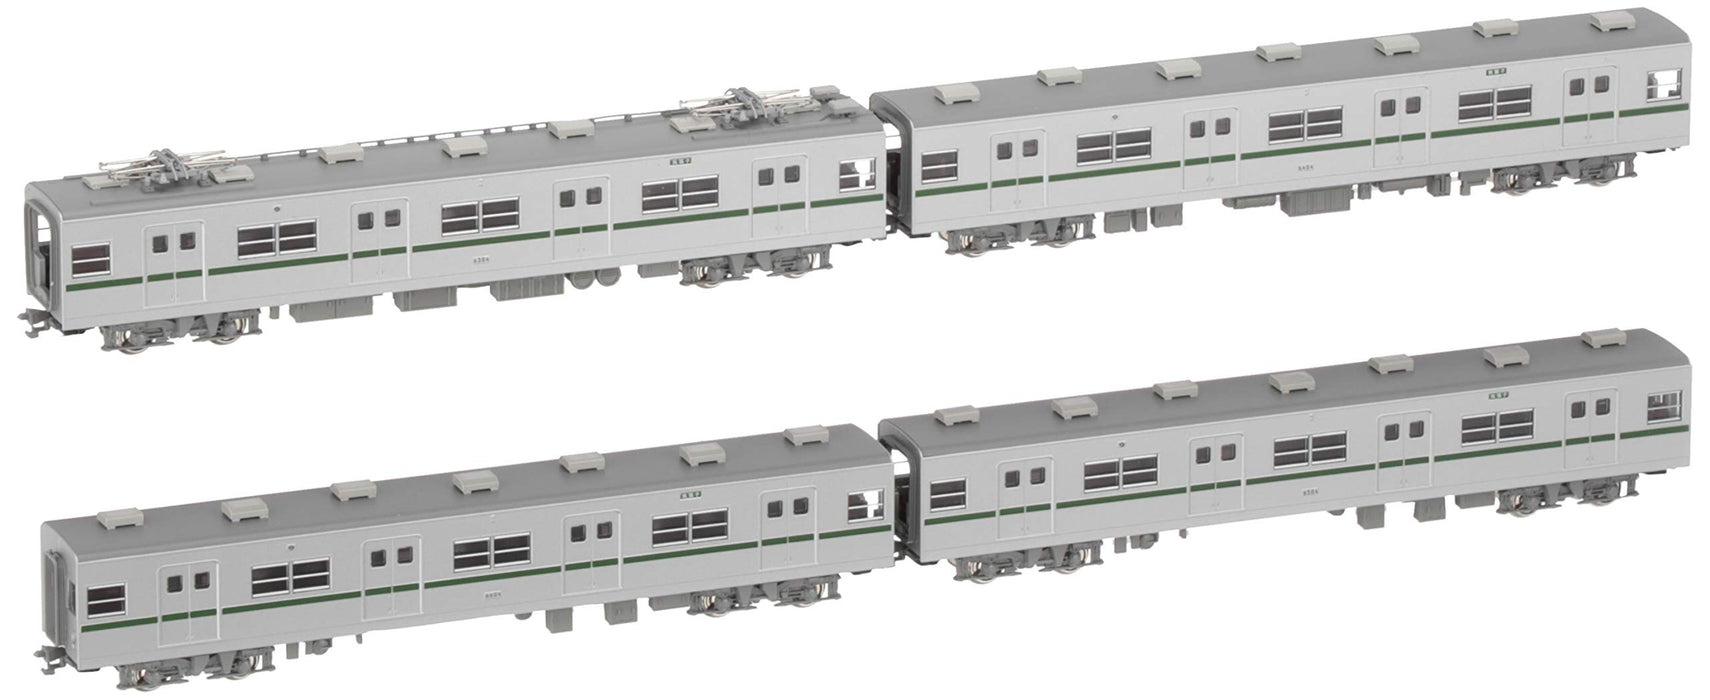 Kato N Gauge Chiyoda Line 6000 Series 4-Car Set 10-1144 Railway Model Train